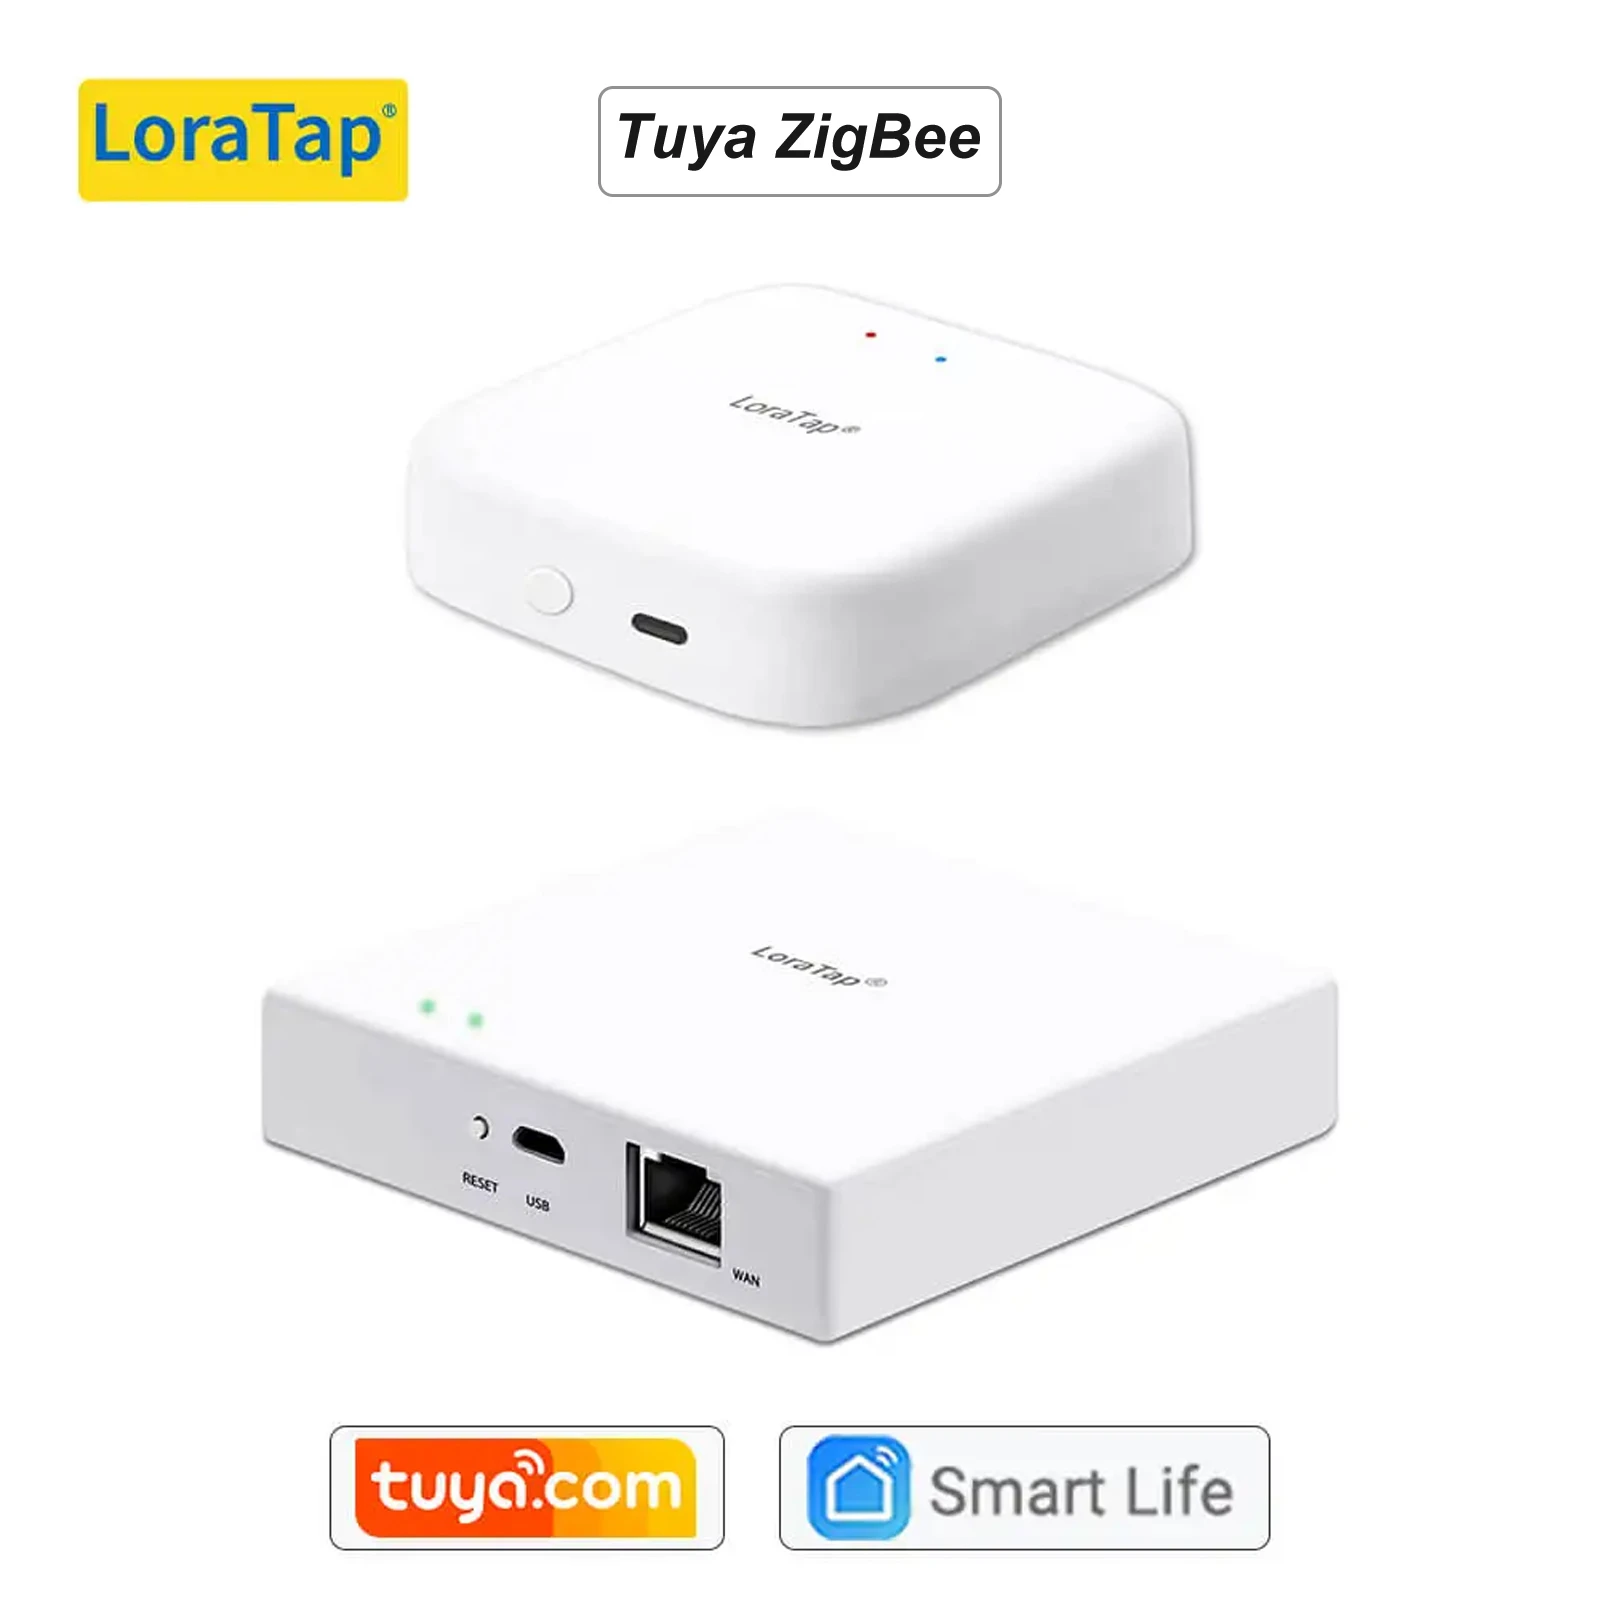 LoraTap Smart Home Tuya ZigBee 3.0 Gateway Hub Bridge Wireless and Wired Smart Life App Remote Control Automation DIY